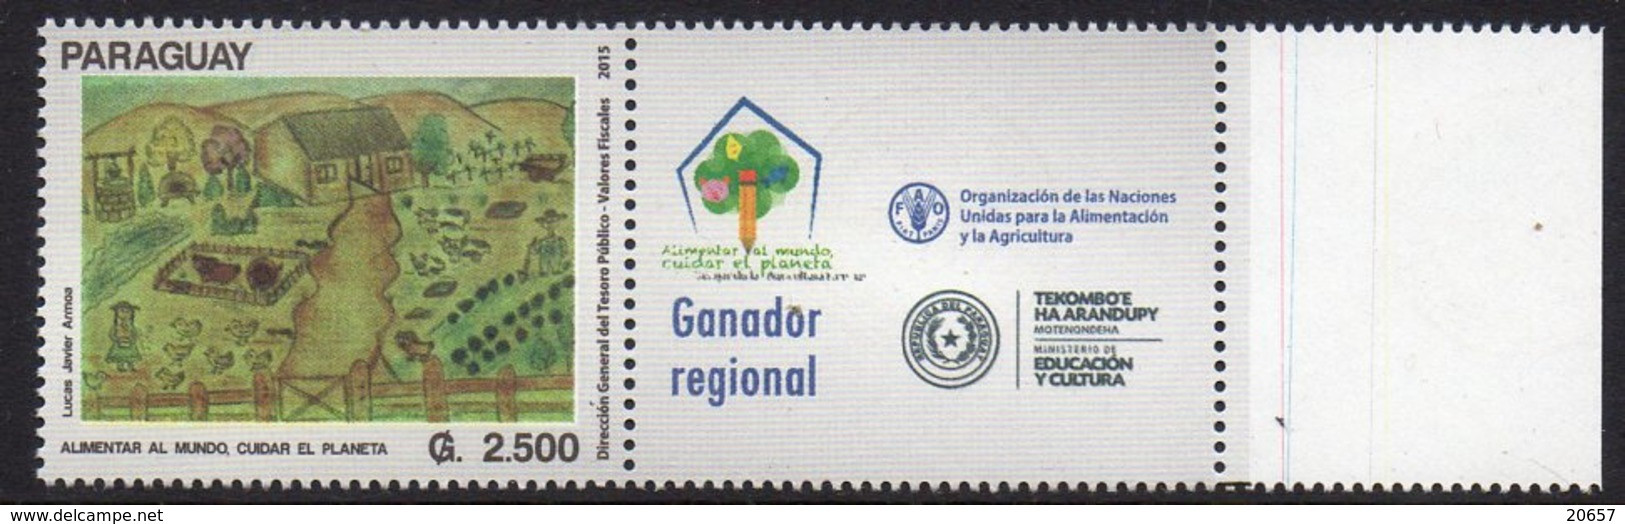 Paraguay 3203 FAO ONU Alimentation - Tegen De Honger